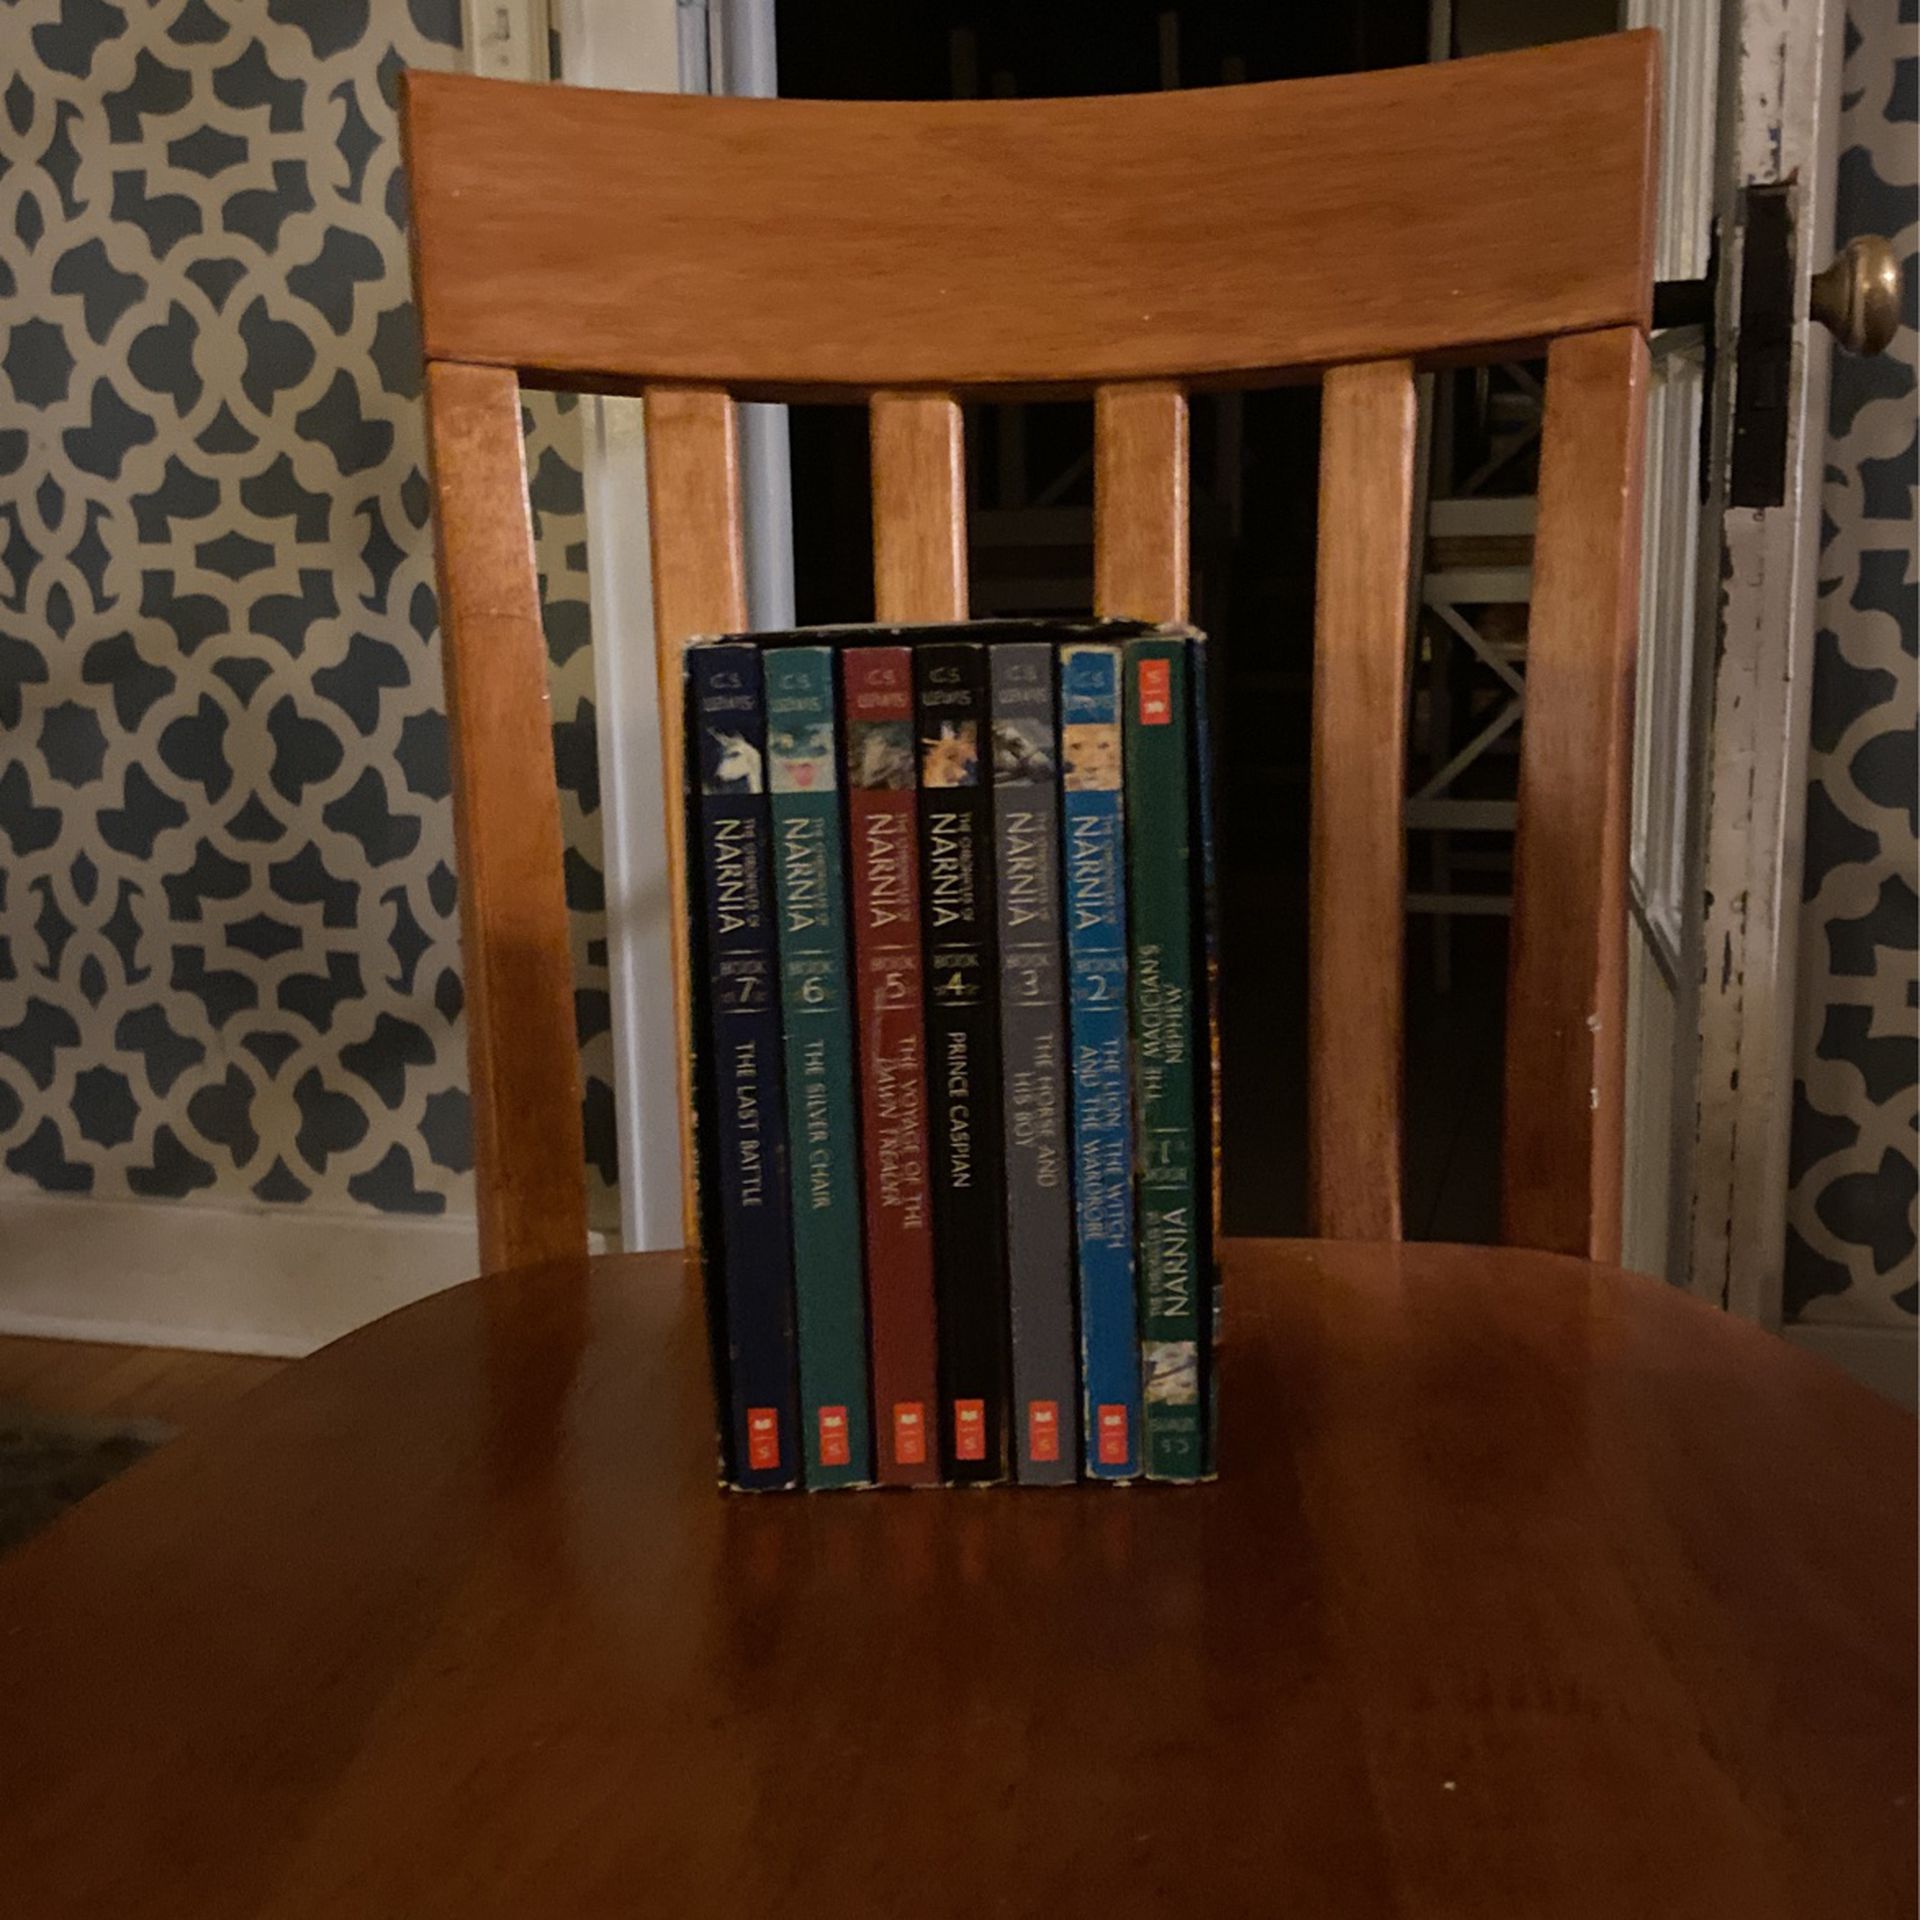 The Narnia Book Series